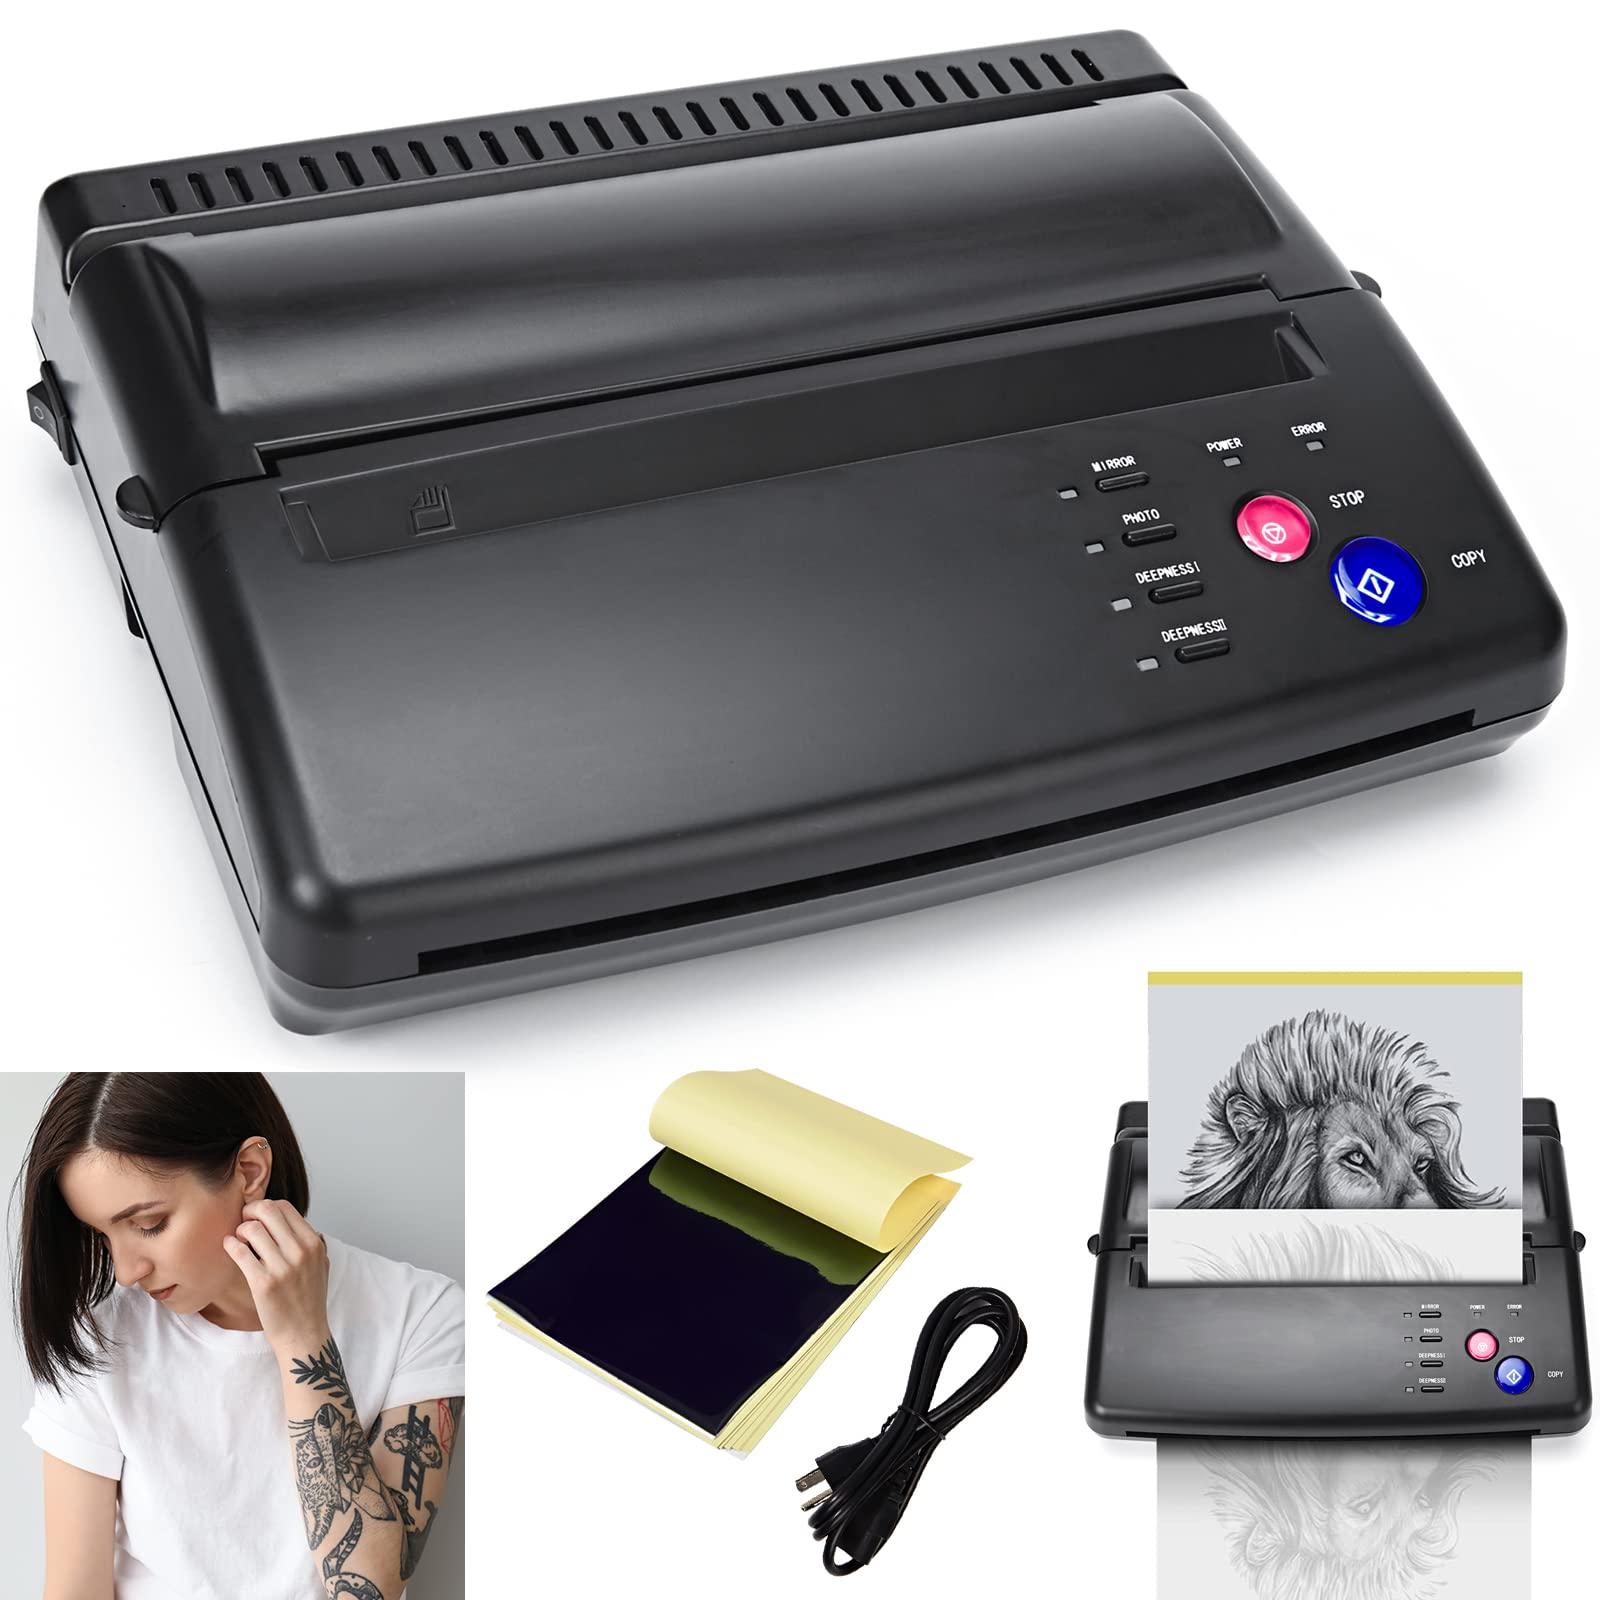 Wholesale Tattoo Transfer Stencil Machine Copier Printer - China